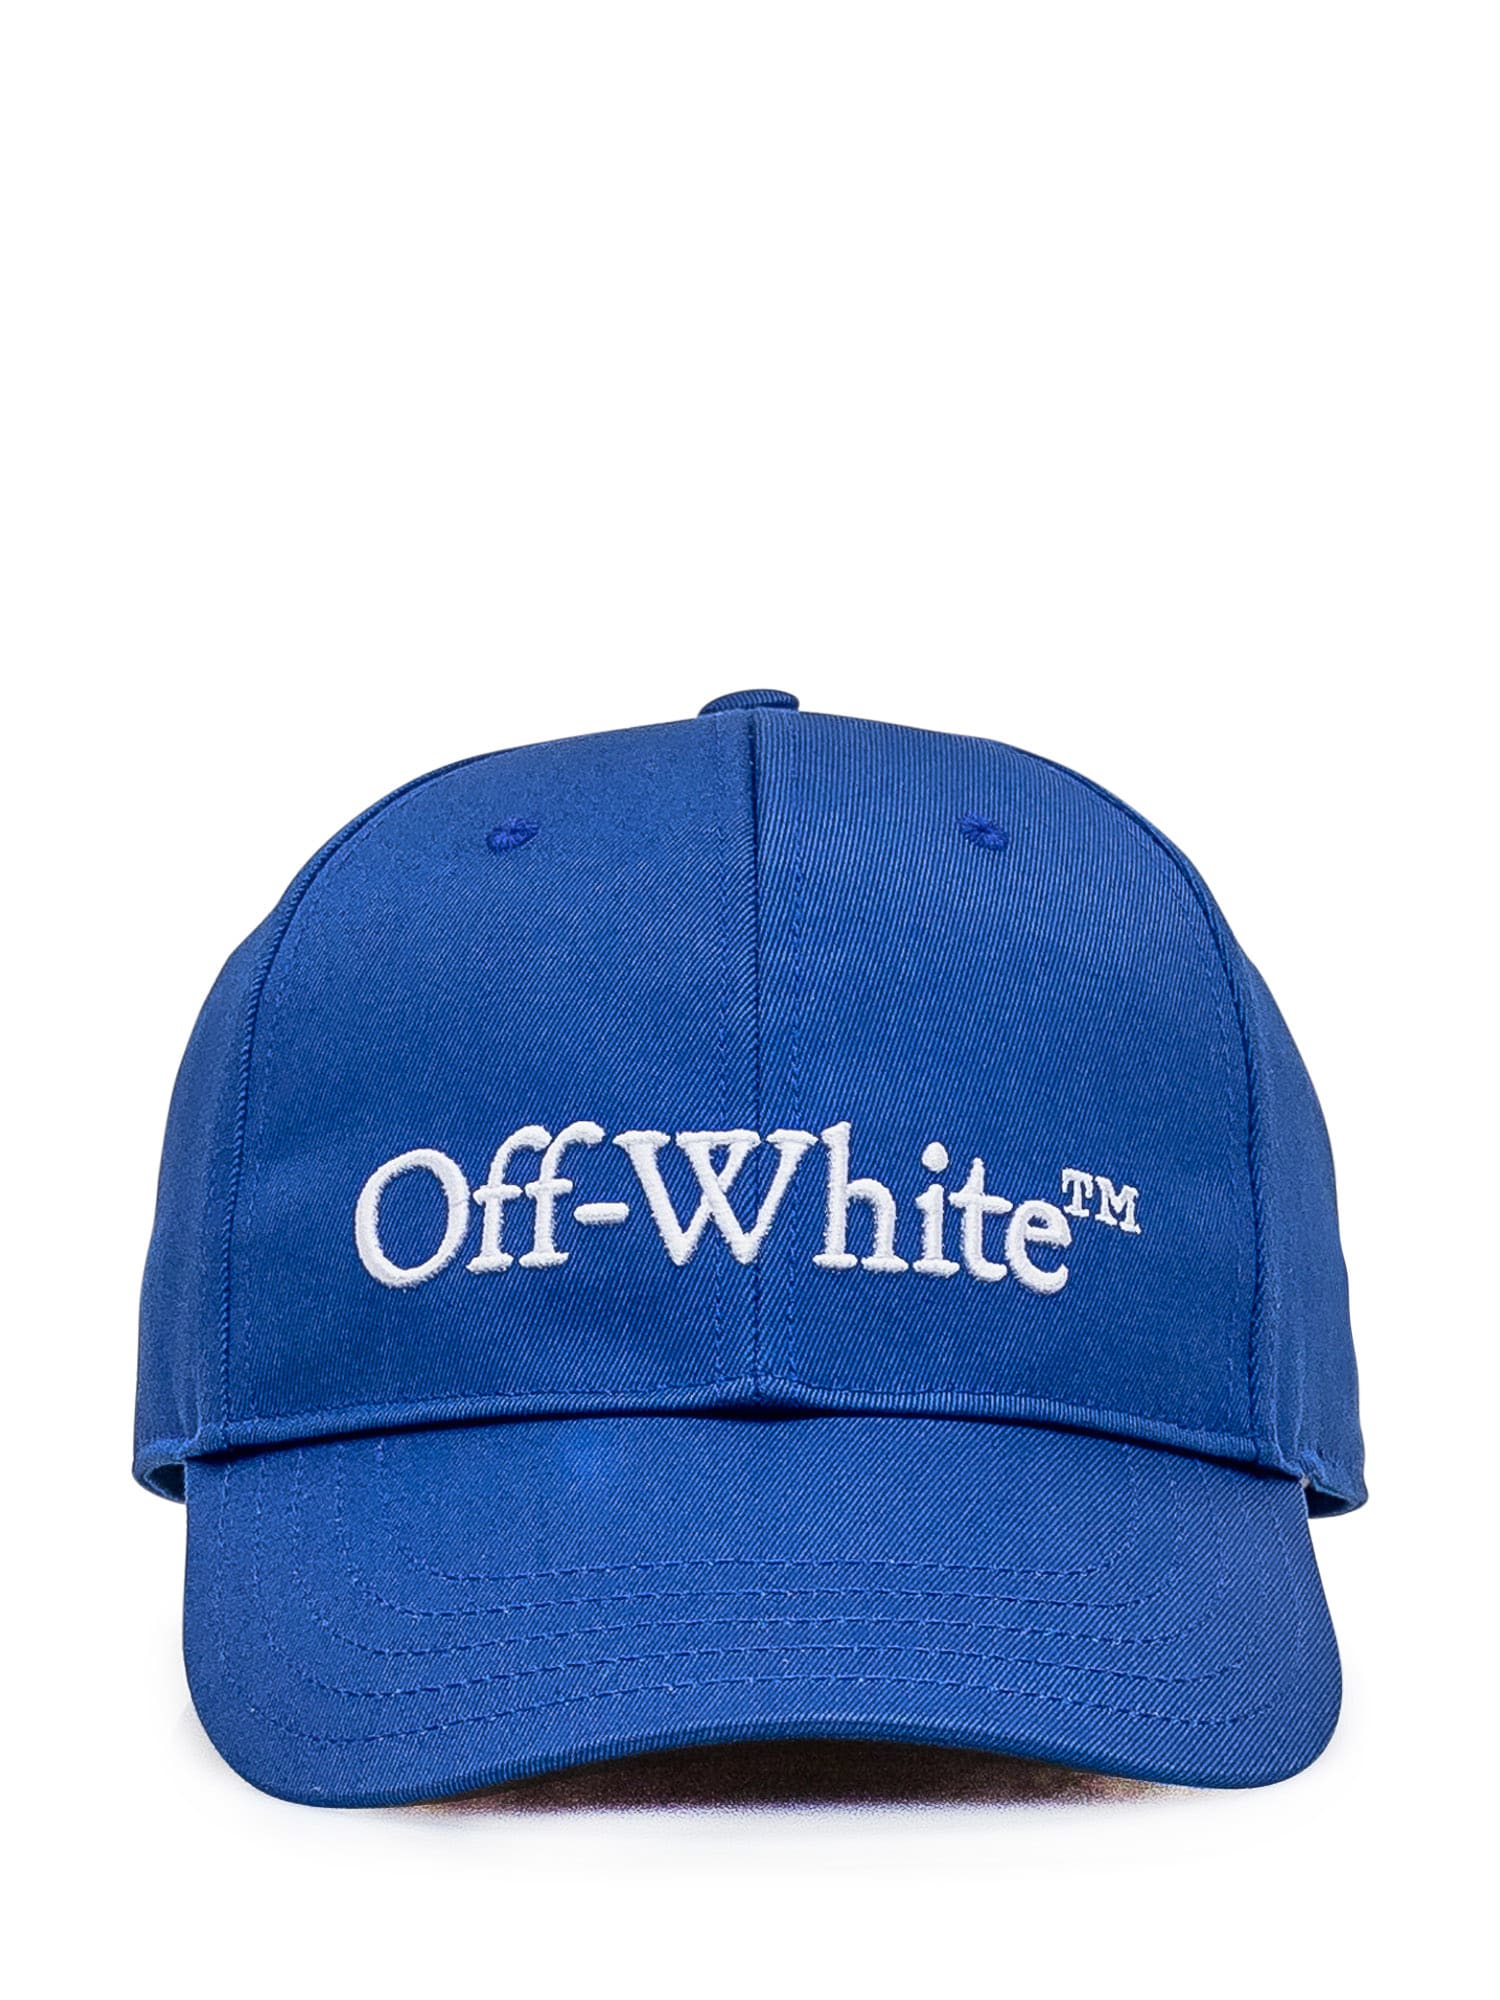 OFF-WHITE LOGO CAP